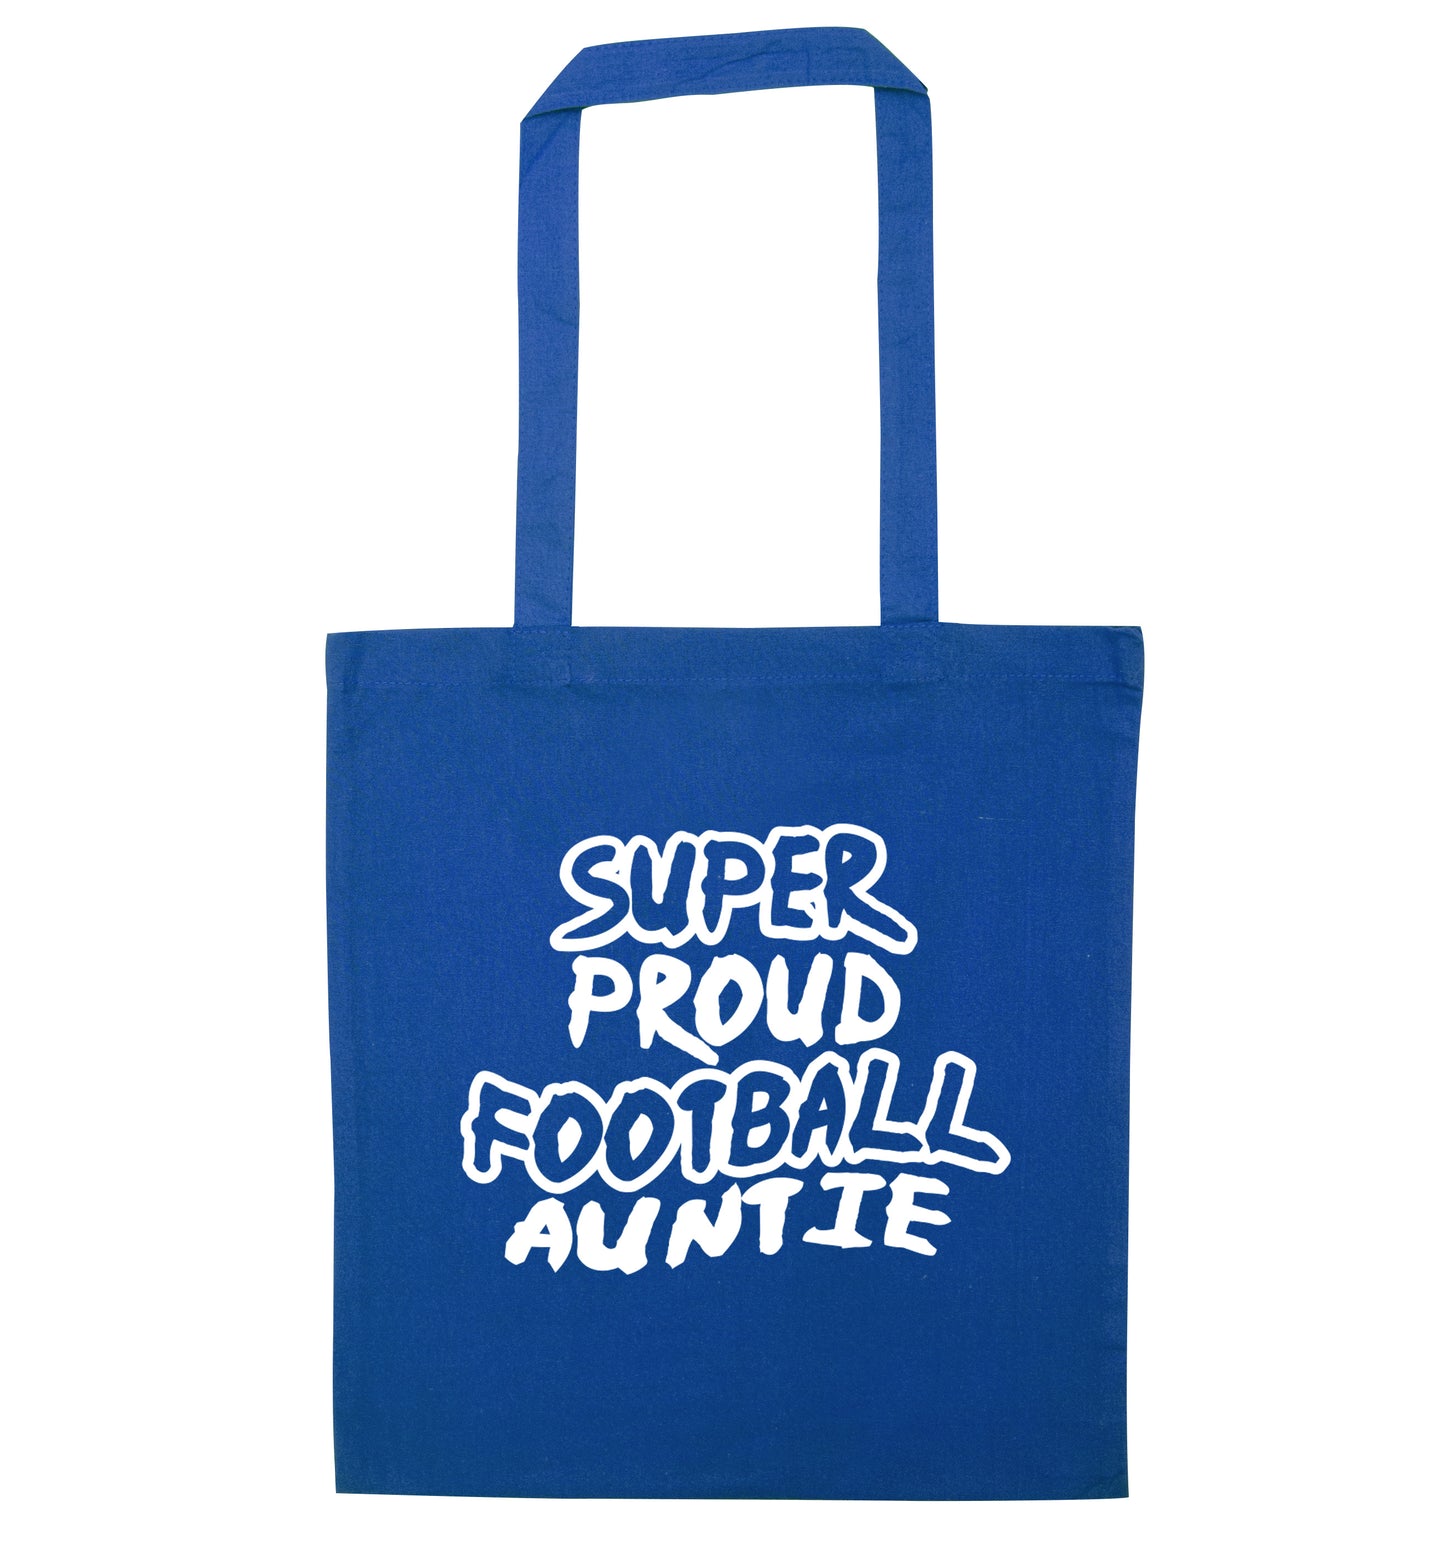 Super proud football auntie blue tote bag